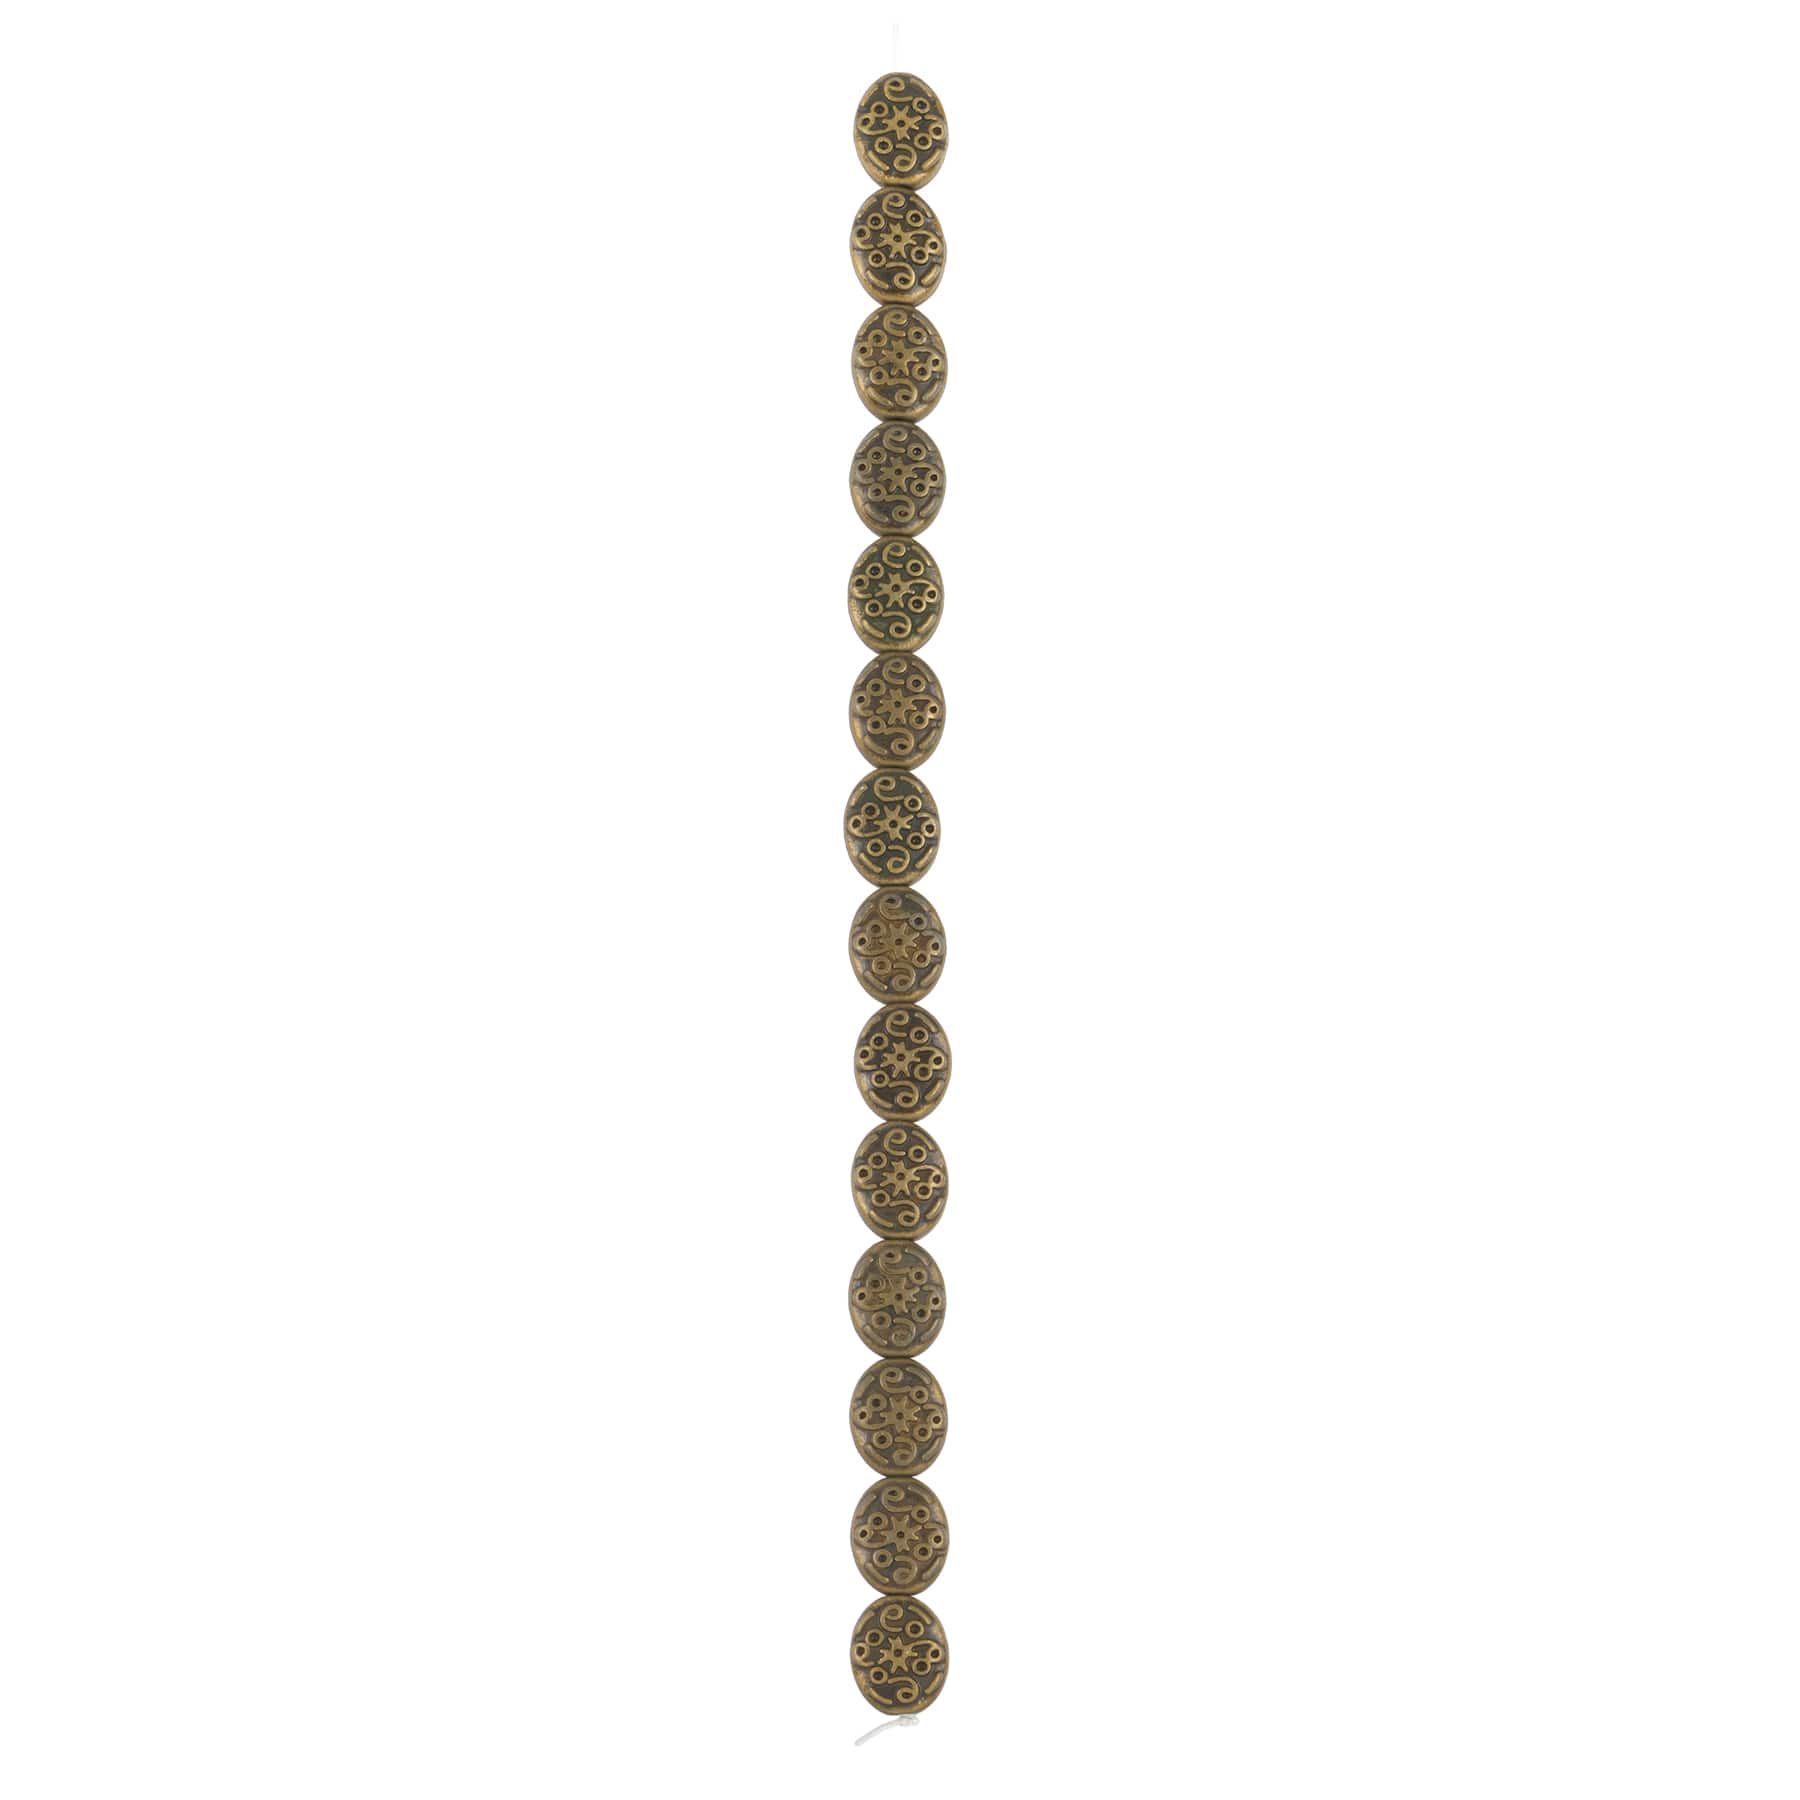 Oxidized Brass Metal Flat Oval Beads, 13mm by Bead Landing&#x2122;